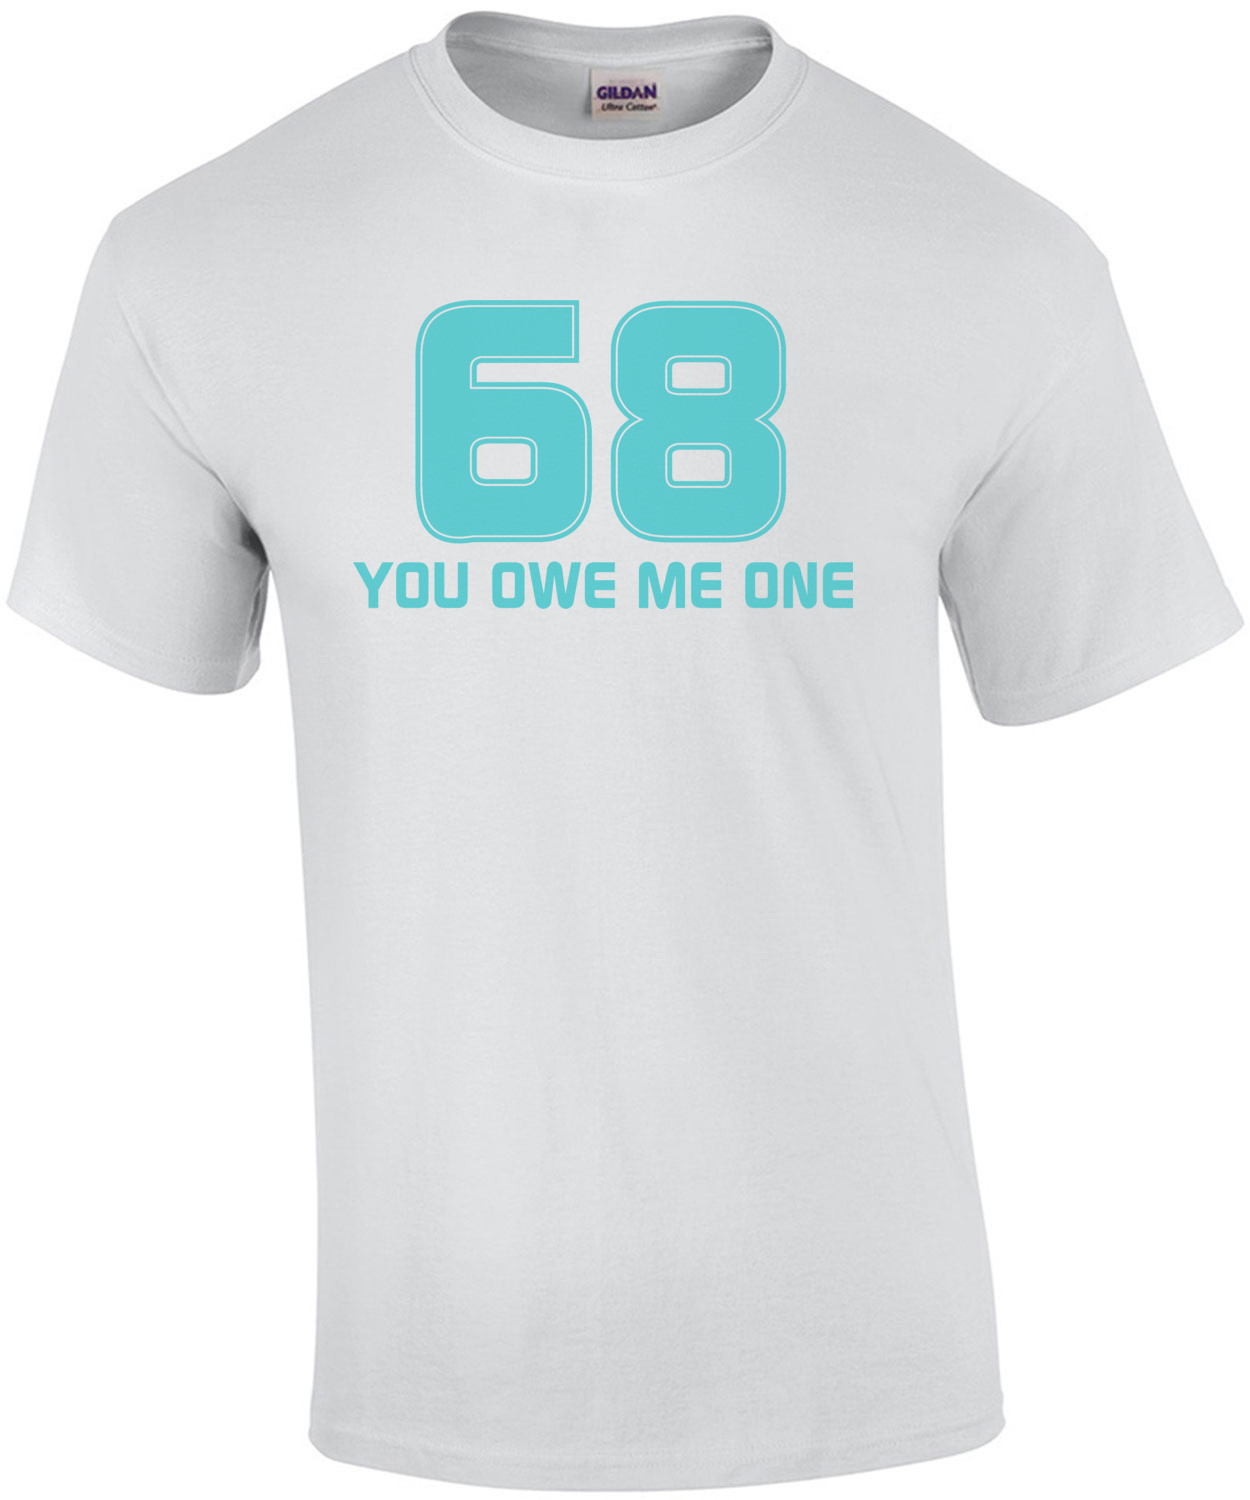 68 You Owe Me One T-shirt 